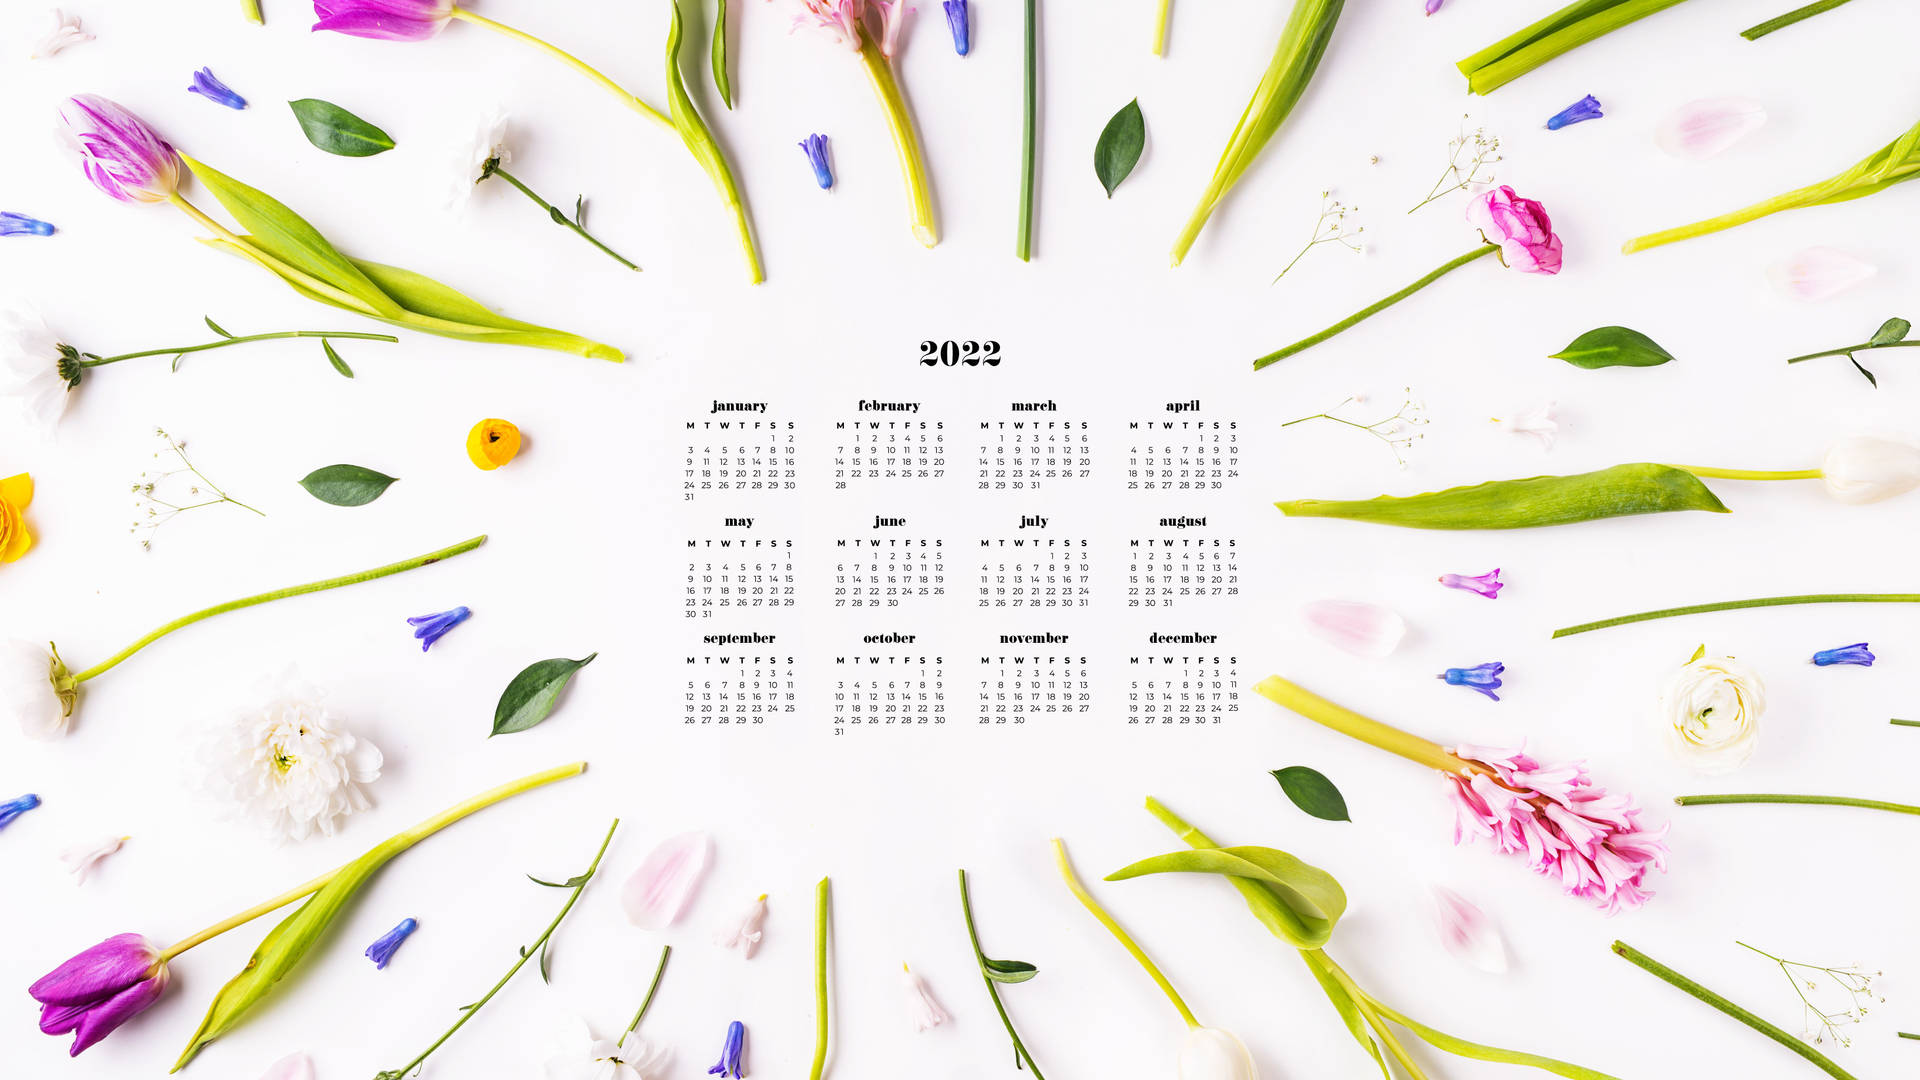 Tulips 2022 Calendar Picture